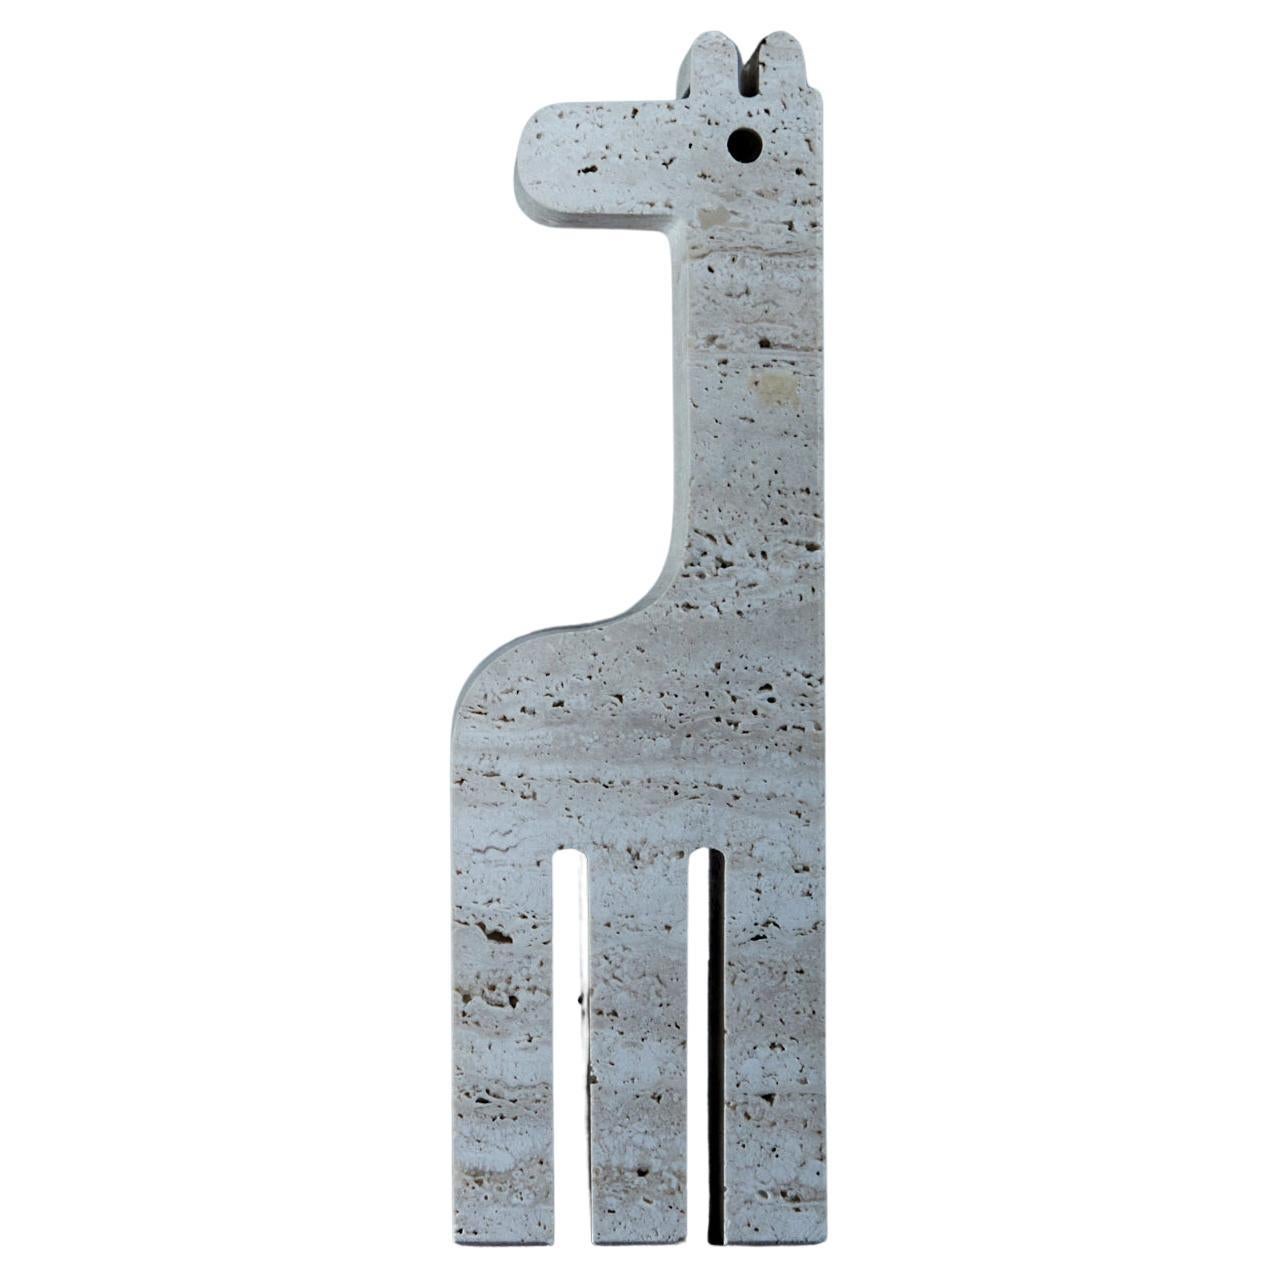 Giraffe figurine made of travertine marble by Fratelli Mannelli